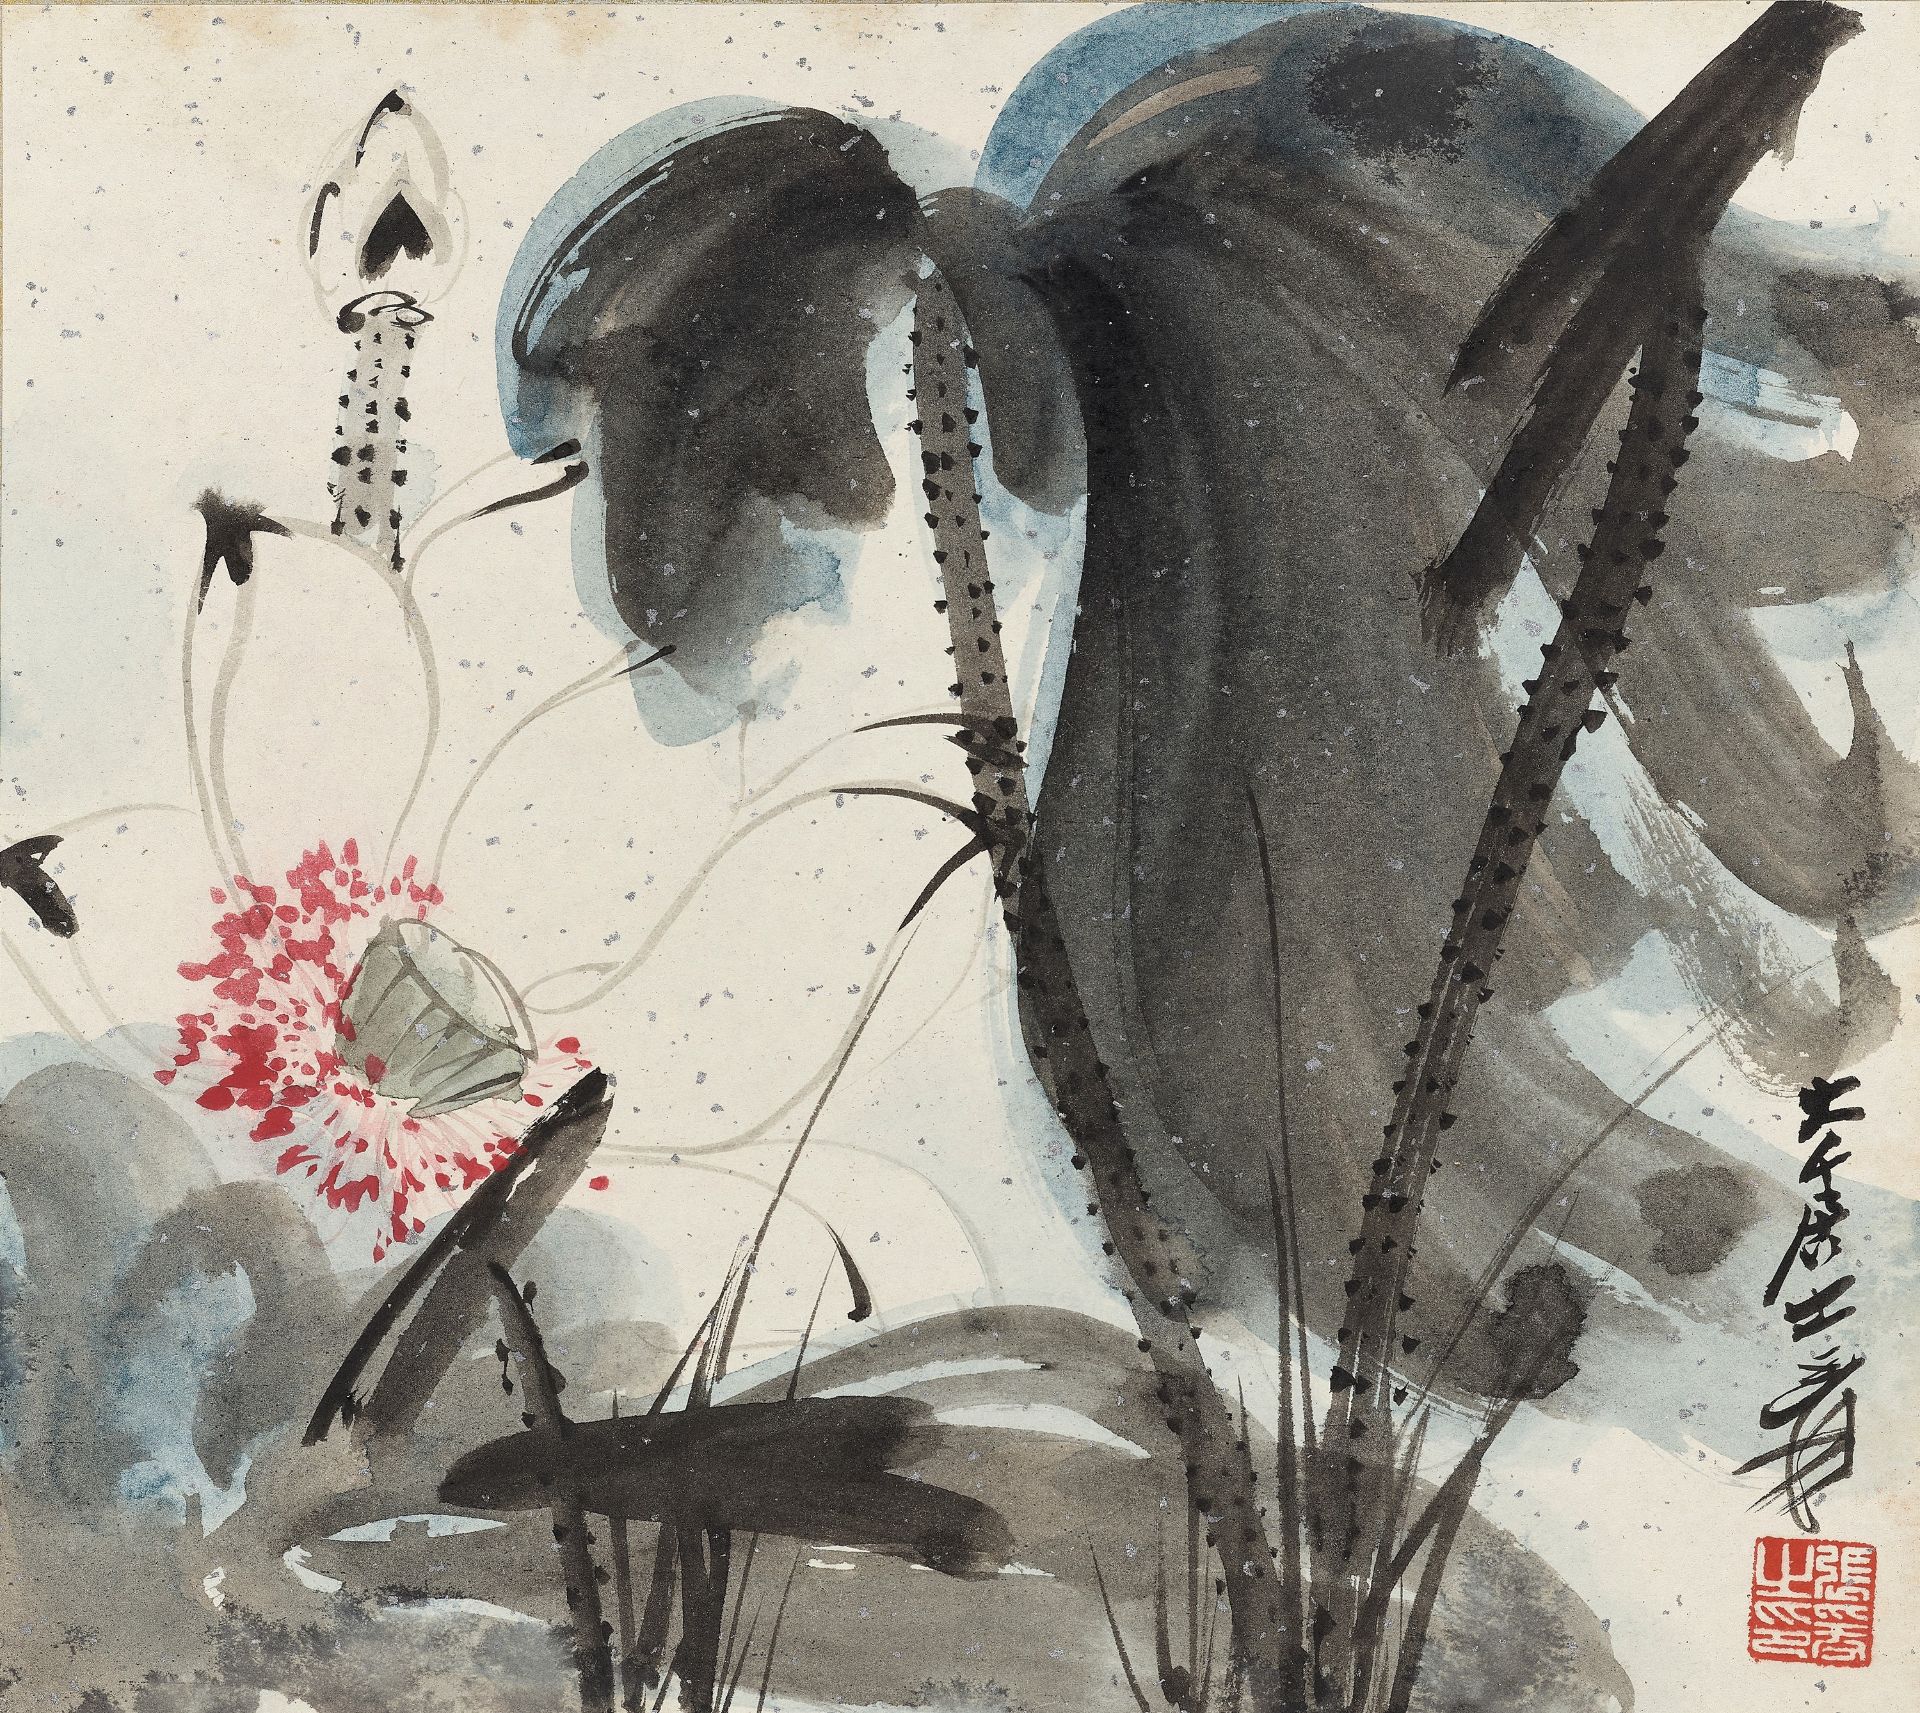 BLACK AND RED LOTUS' BY ZHANG DAQIAN (1899-1983)